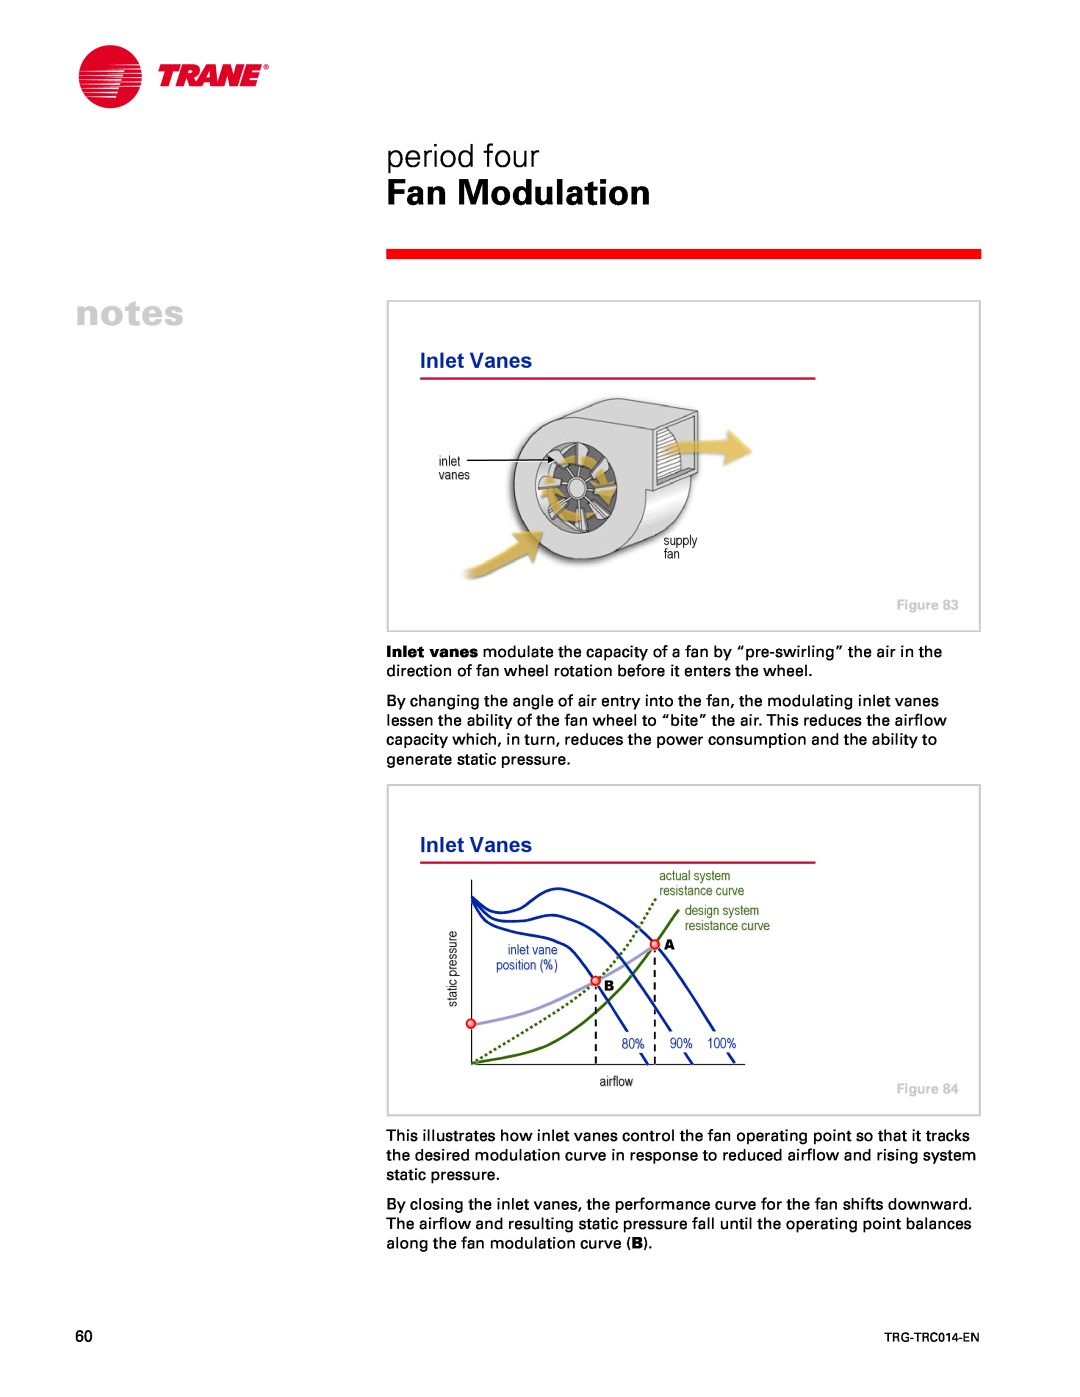 Trane TRG-TRC014-EN manual Inlet Vanes, Fan Modulation, period four 